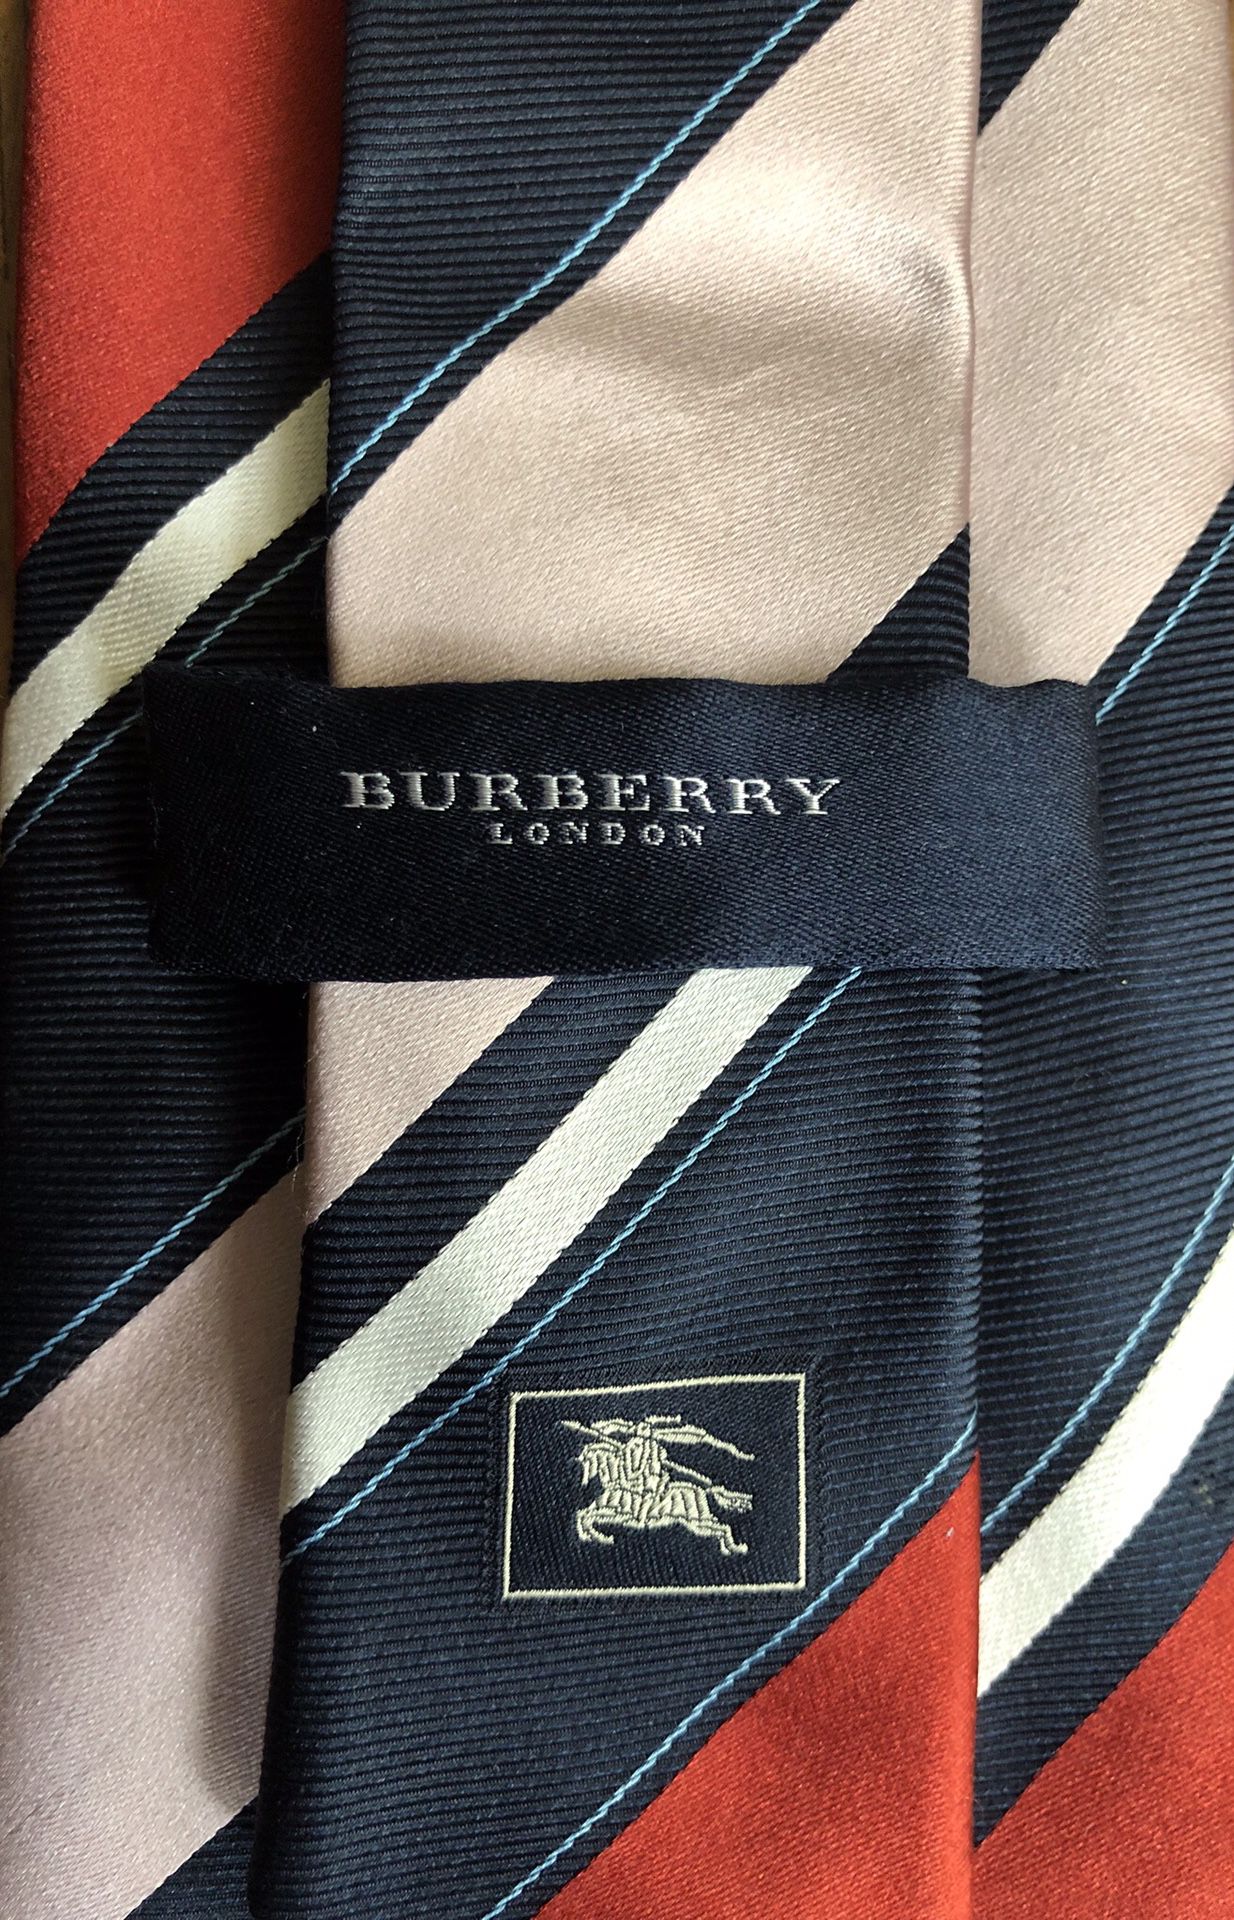 Burberry Red & Blue Regimental Stripe Tie ($190 Retail)